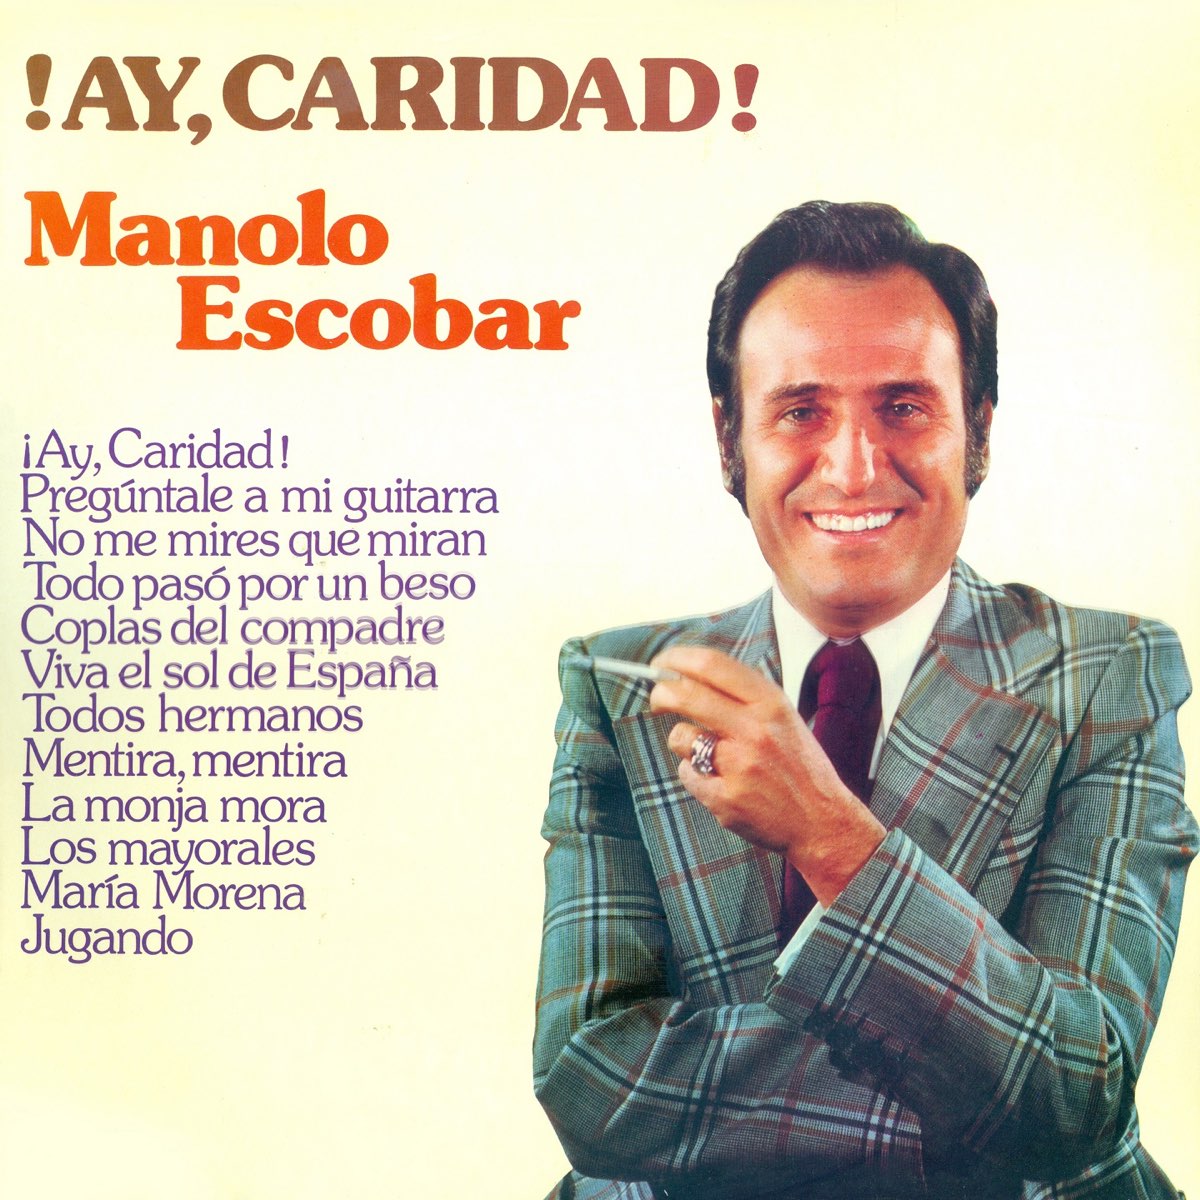 Ay, Caridad! by Manolo Escobar on Apple Music